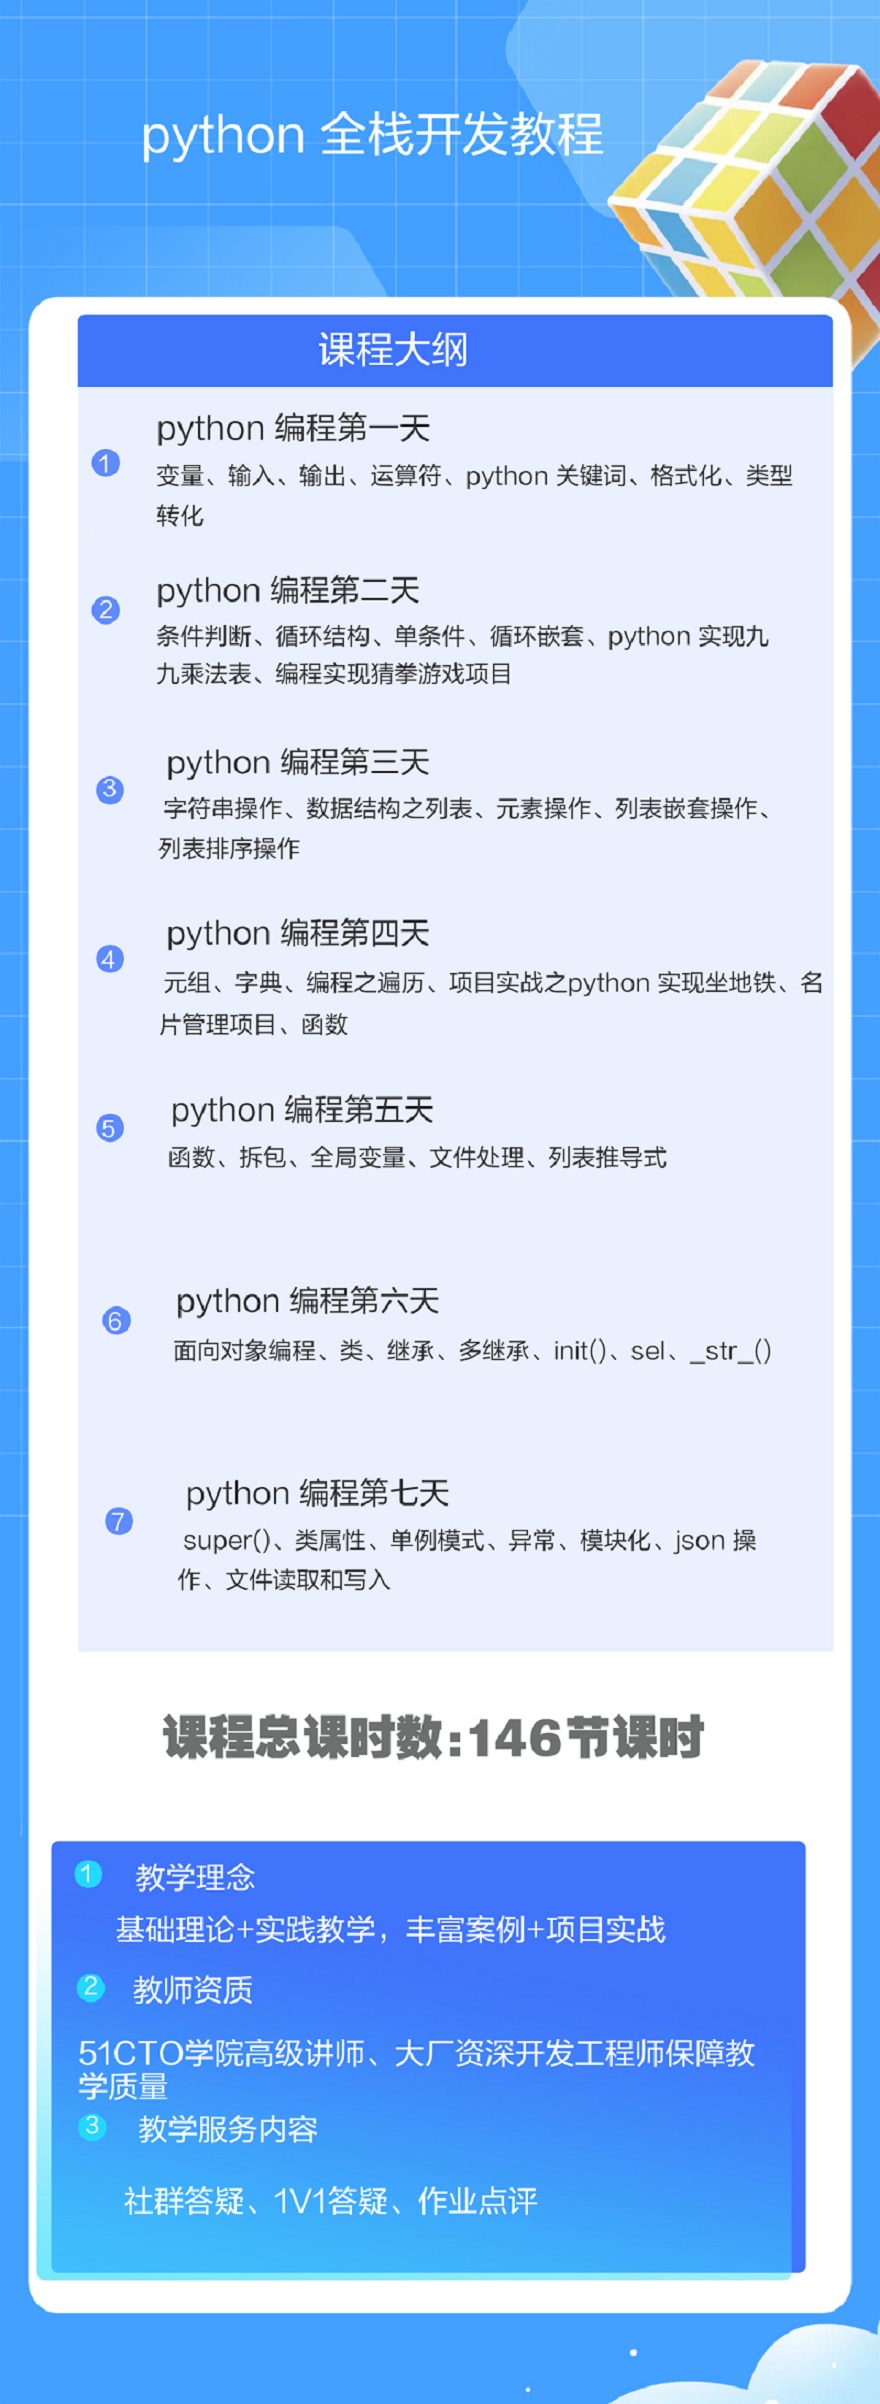 python全栈开发教程5.jpeg